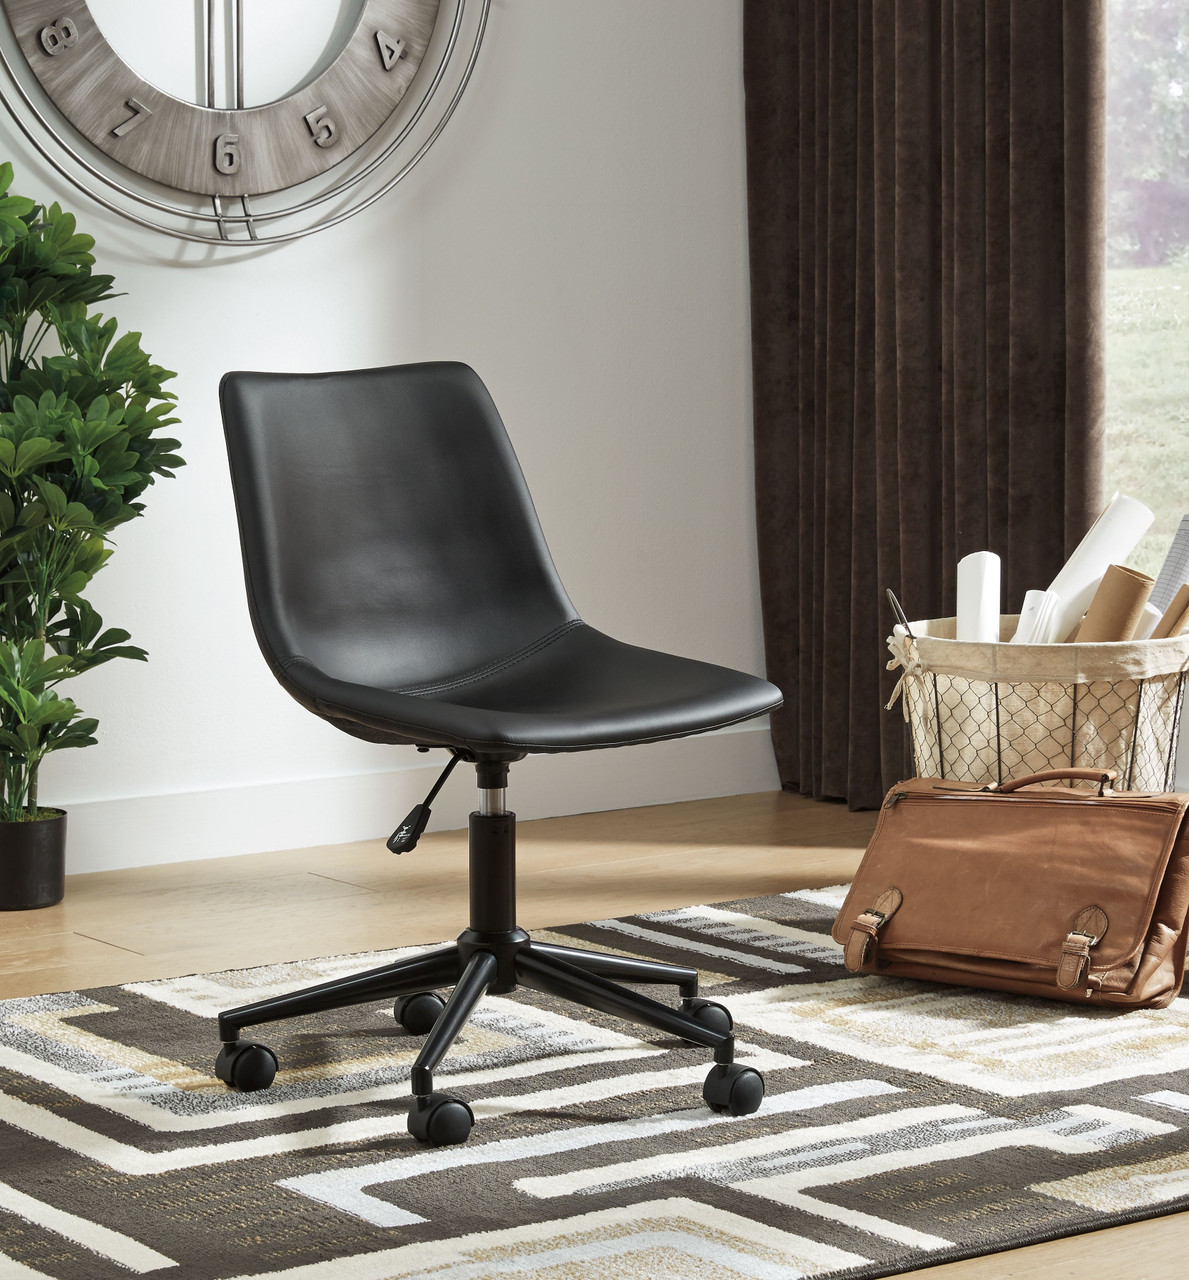 The Office Chair Program Black Home Office Swivel Desk Chair Sold